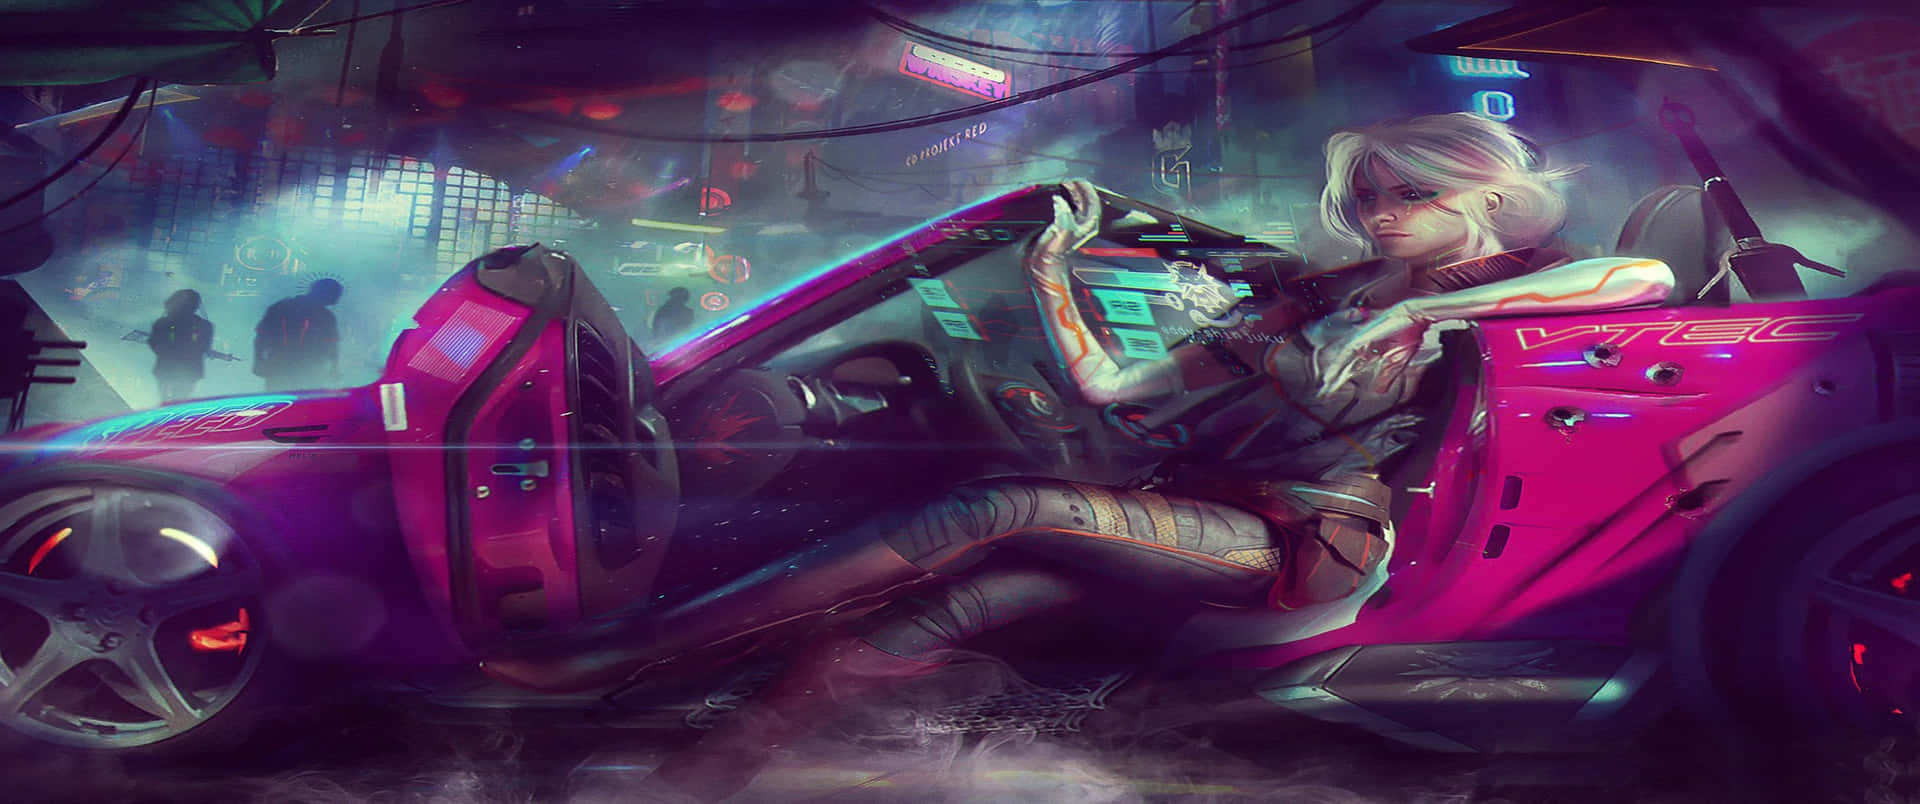 3440x1440p Cyberpunk 2077 Background Woman In A Violet Car